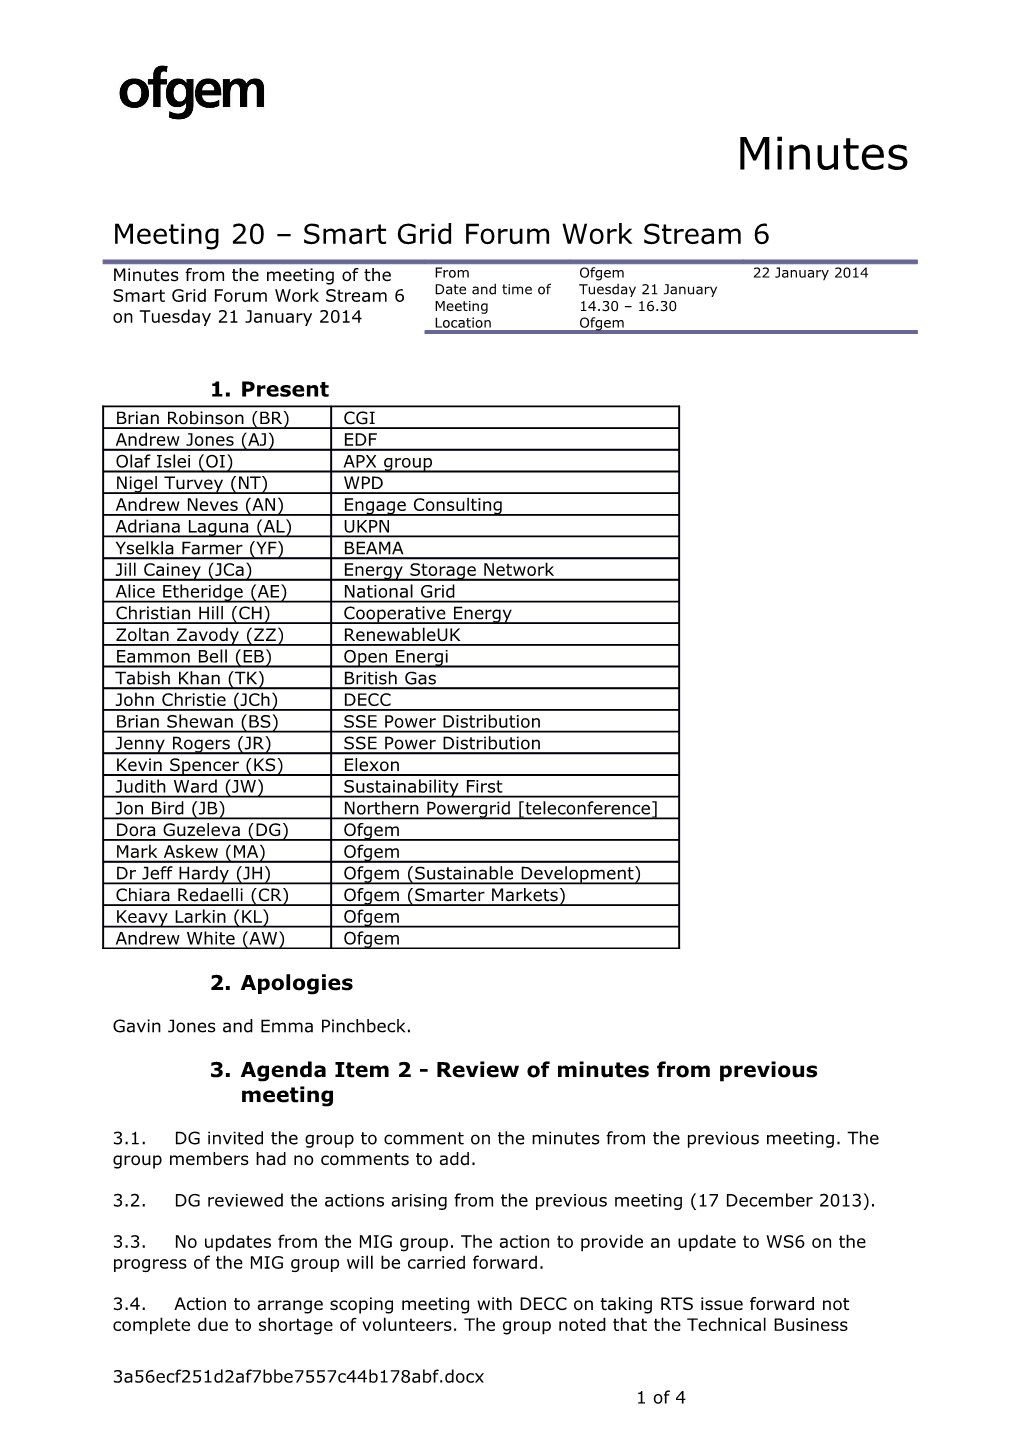 Meeting 20 Smart Grid Forum Work Stream 6